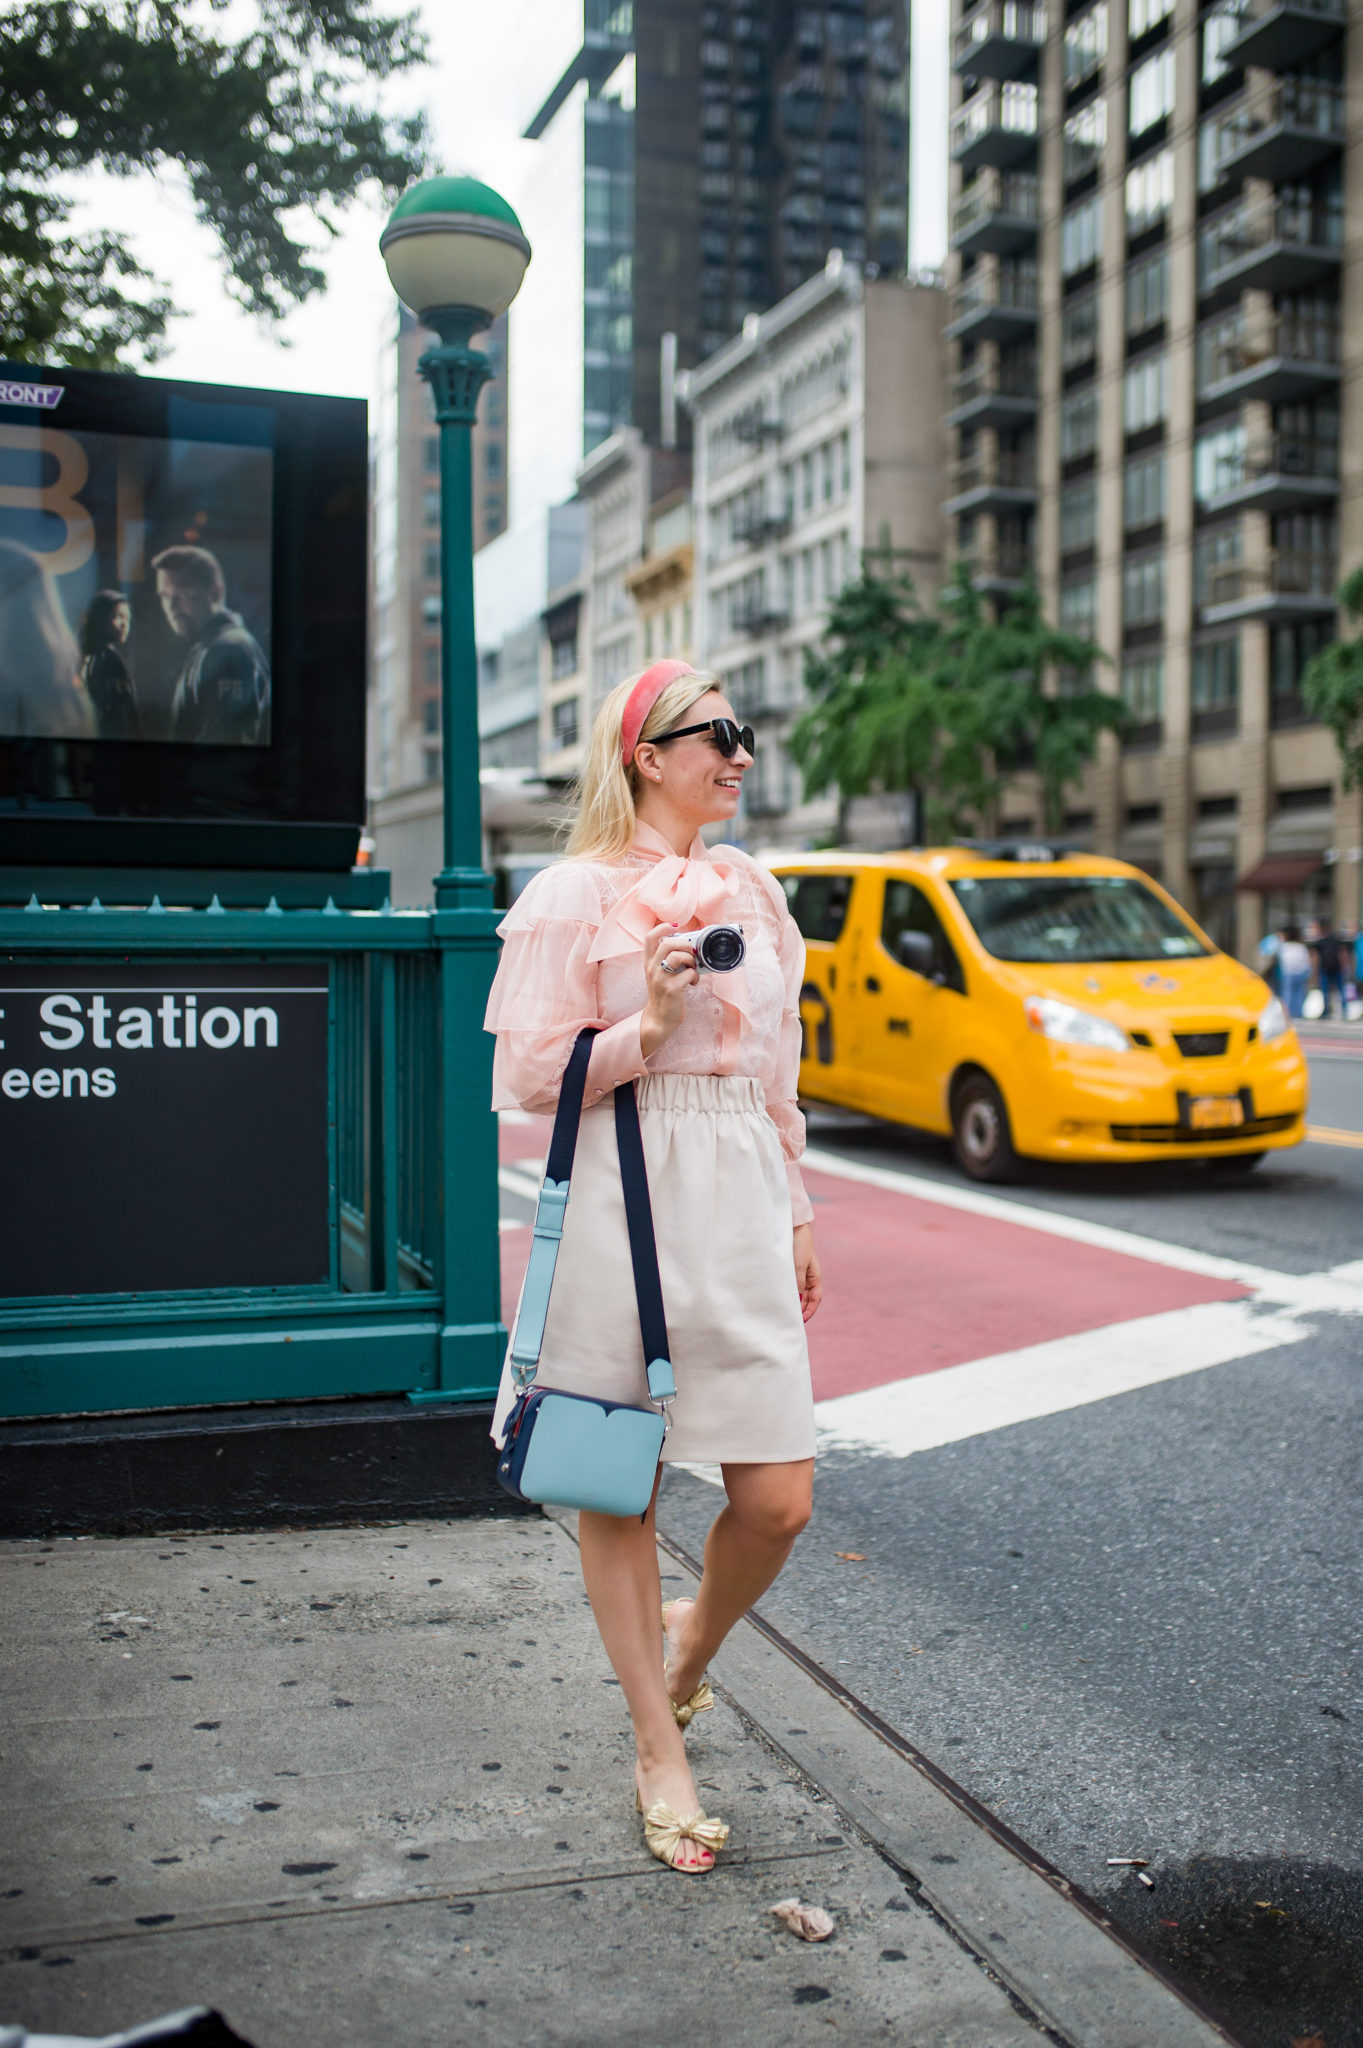 Kate Spade New York Camera Bag Black : : Fashion